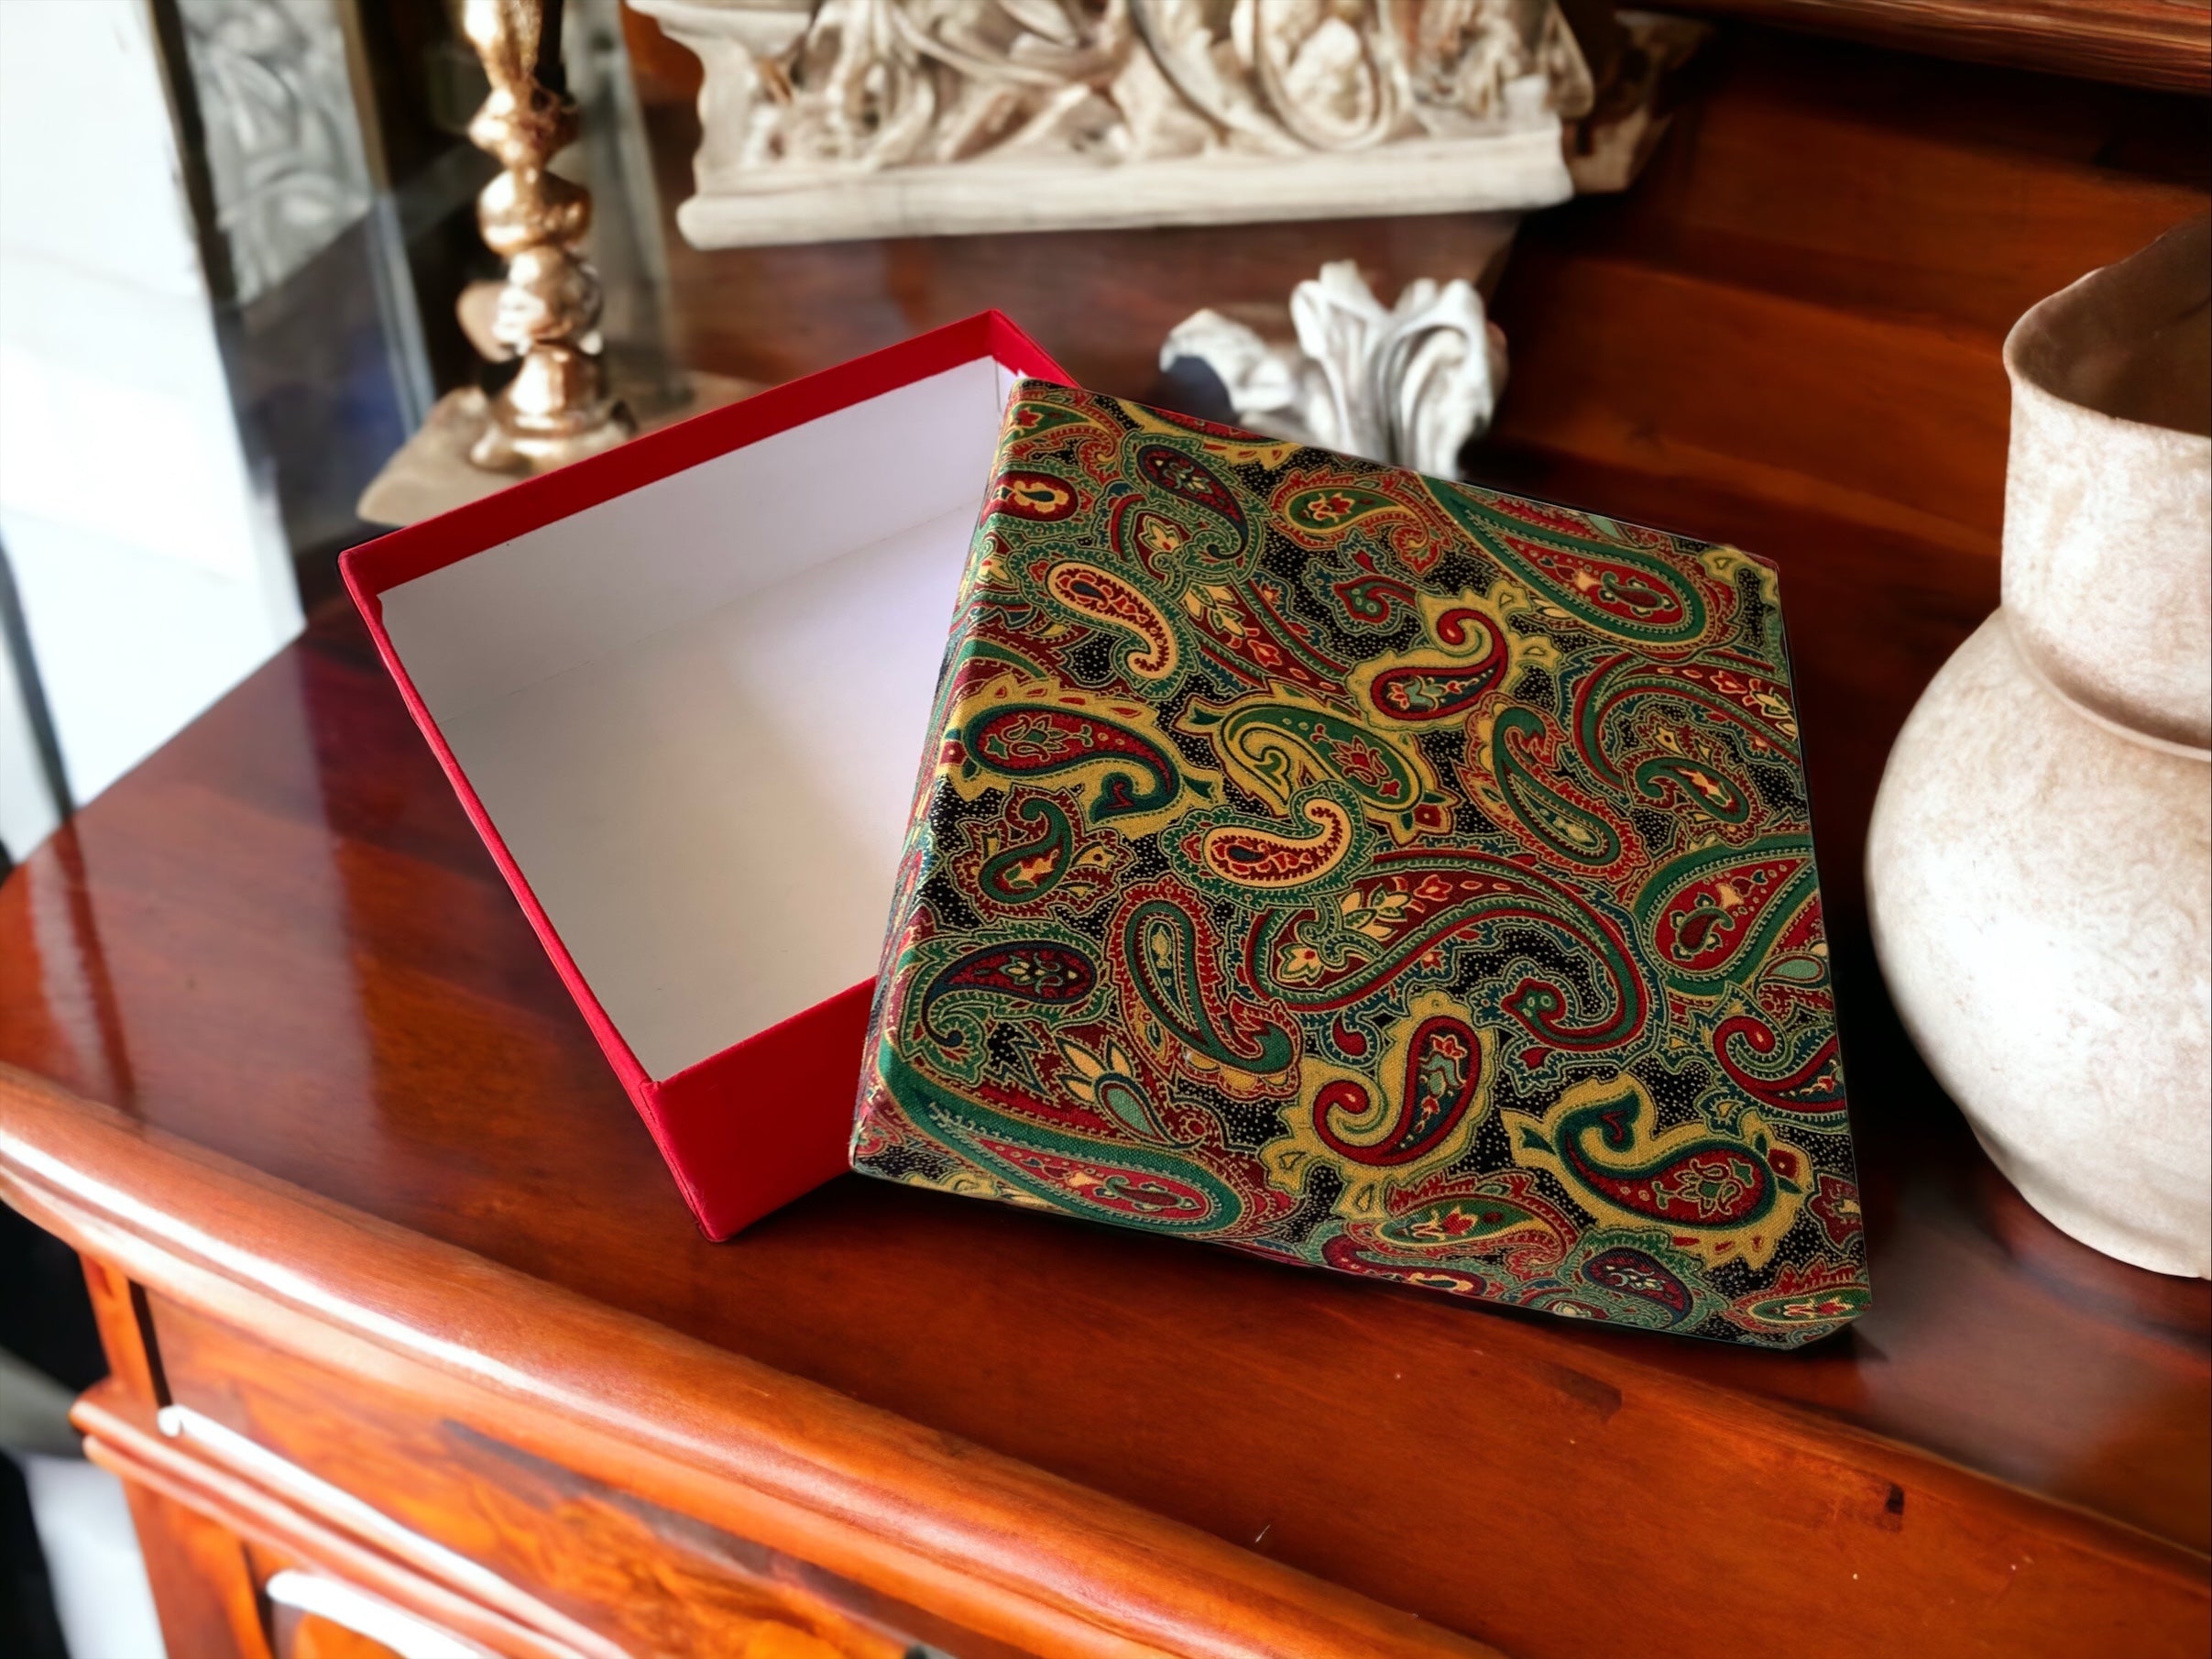 7 1/2” Square Paisley Fabric Covered Keepsake Box